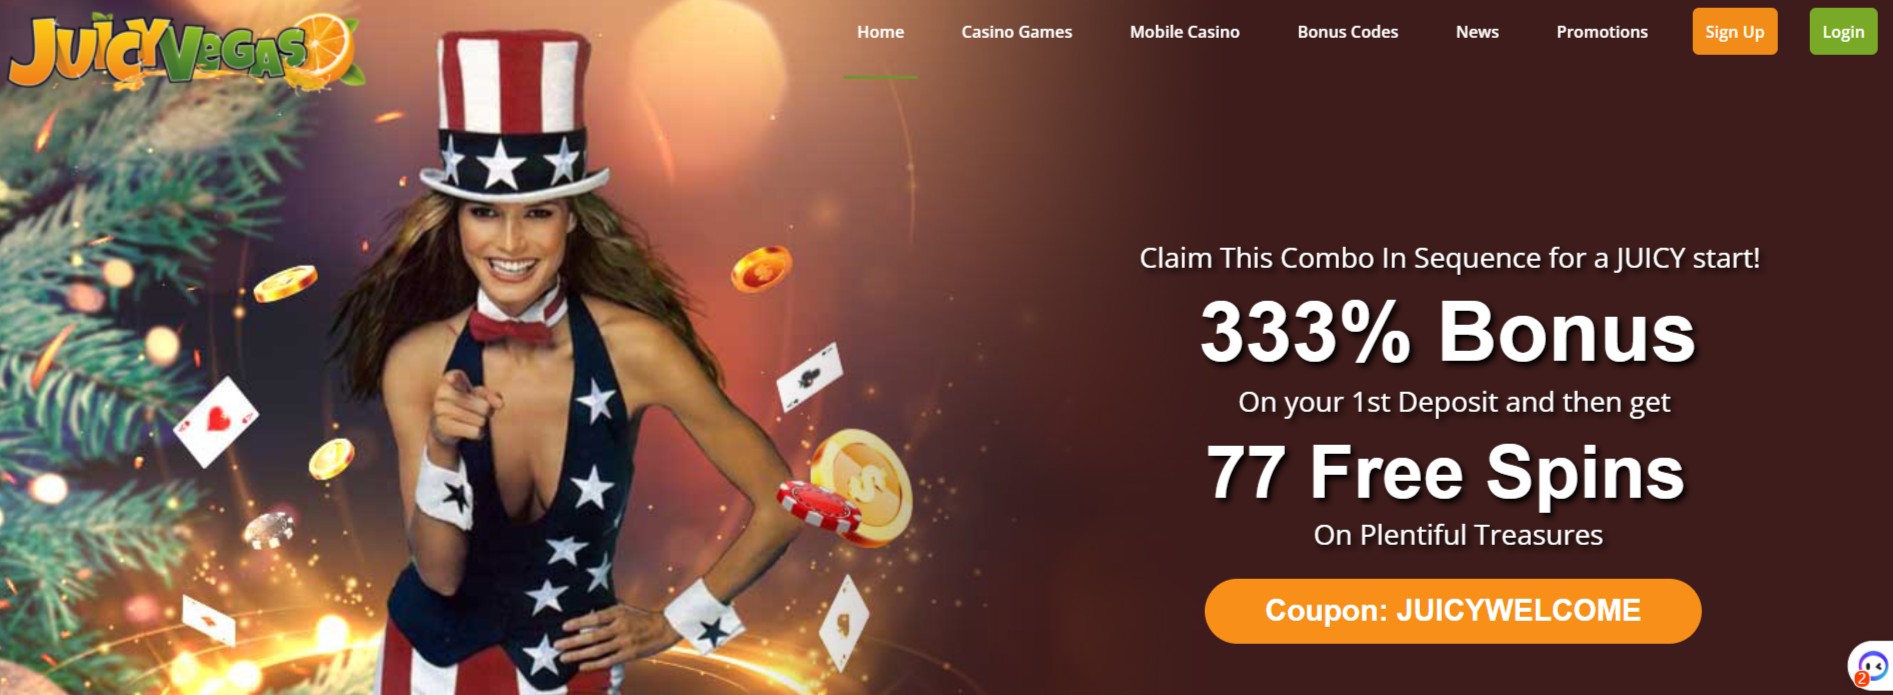 juicy vegas casino website homepage screenshot